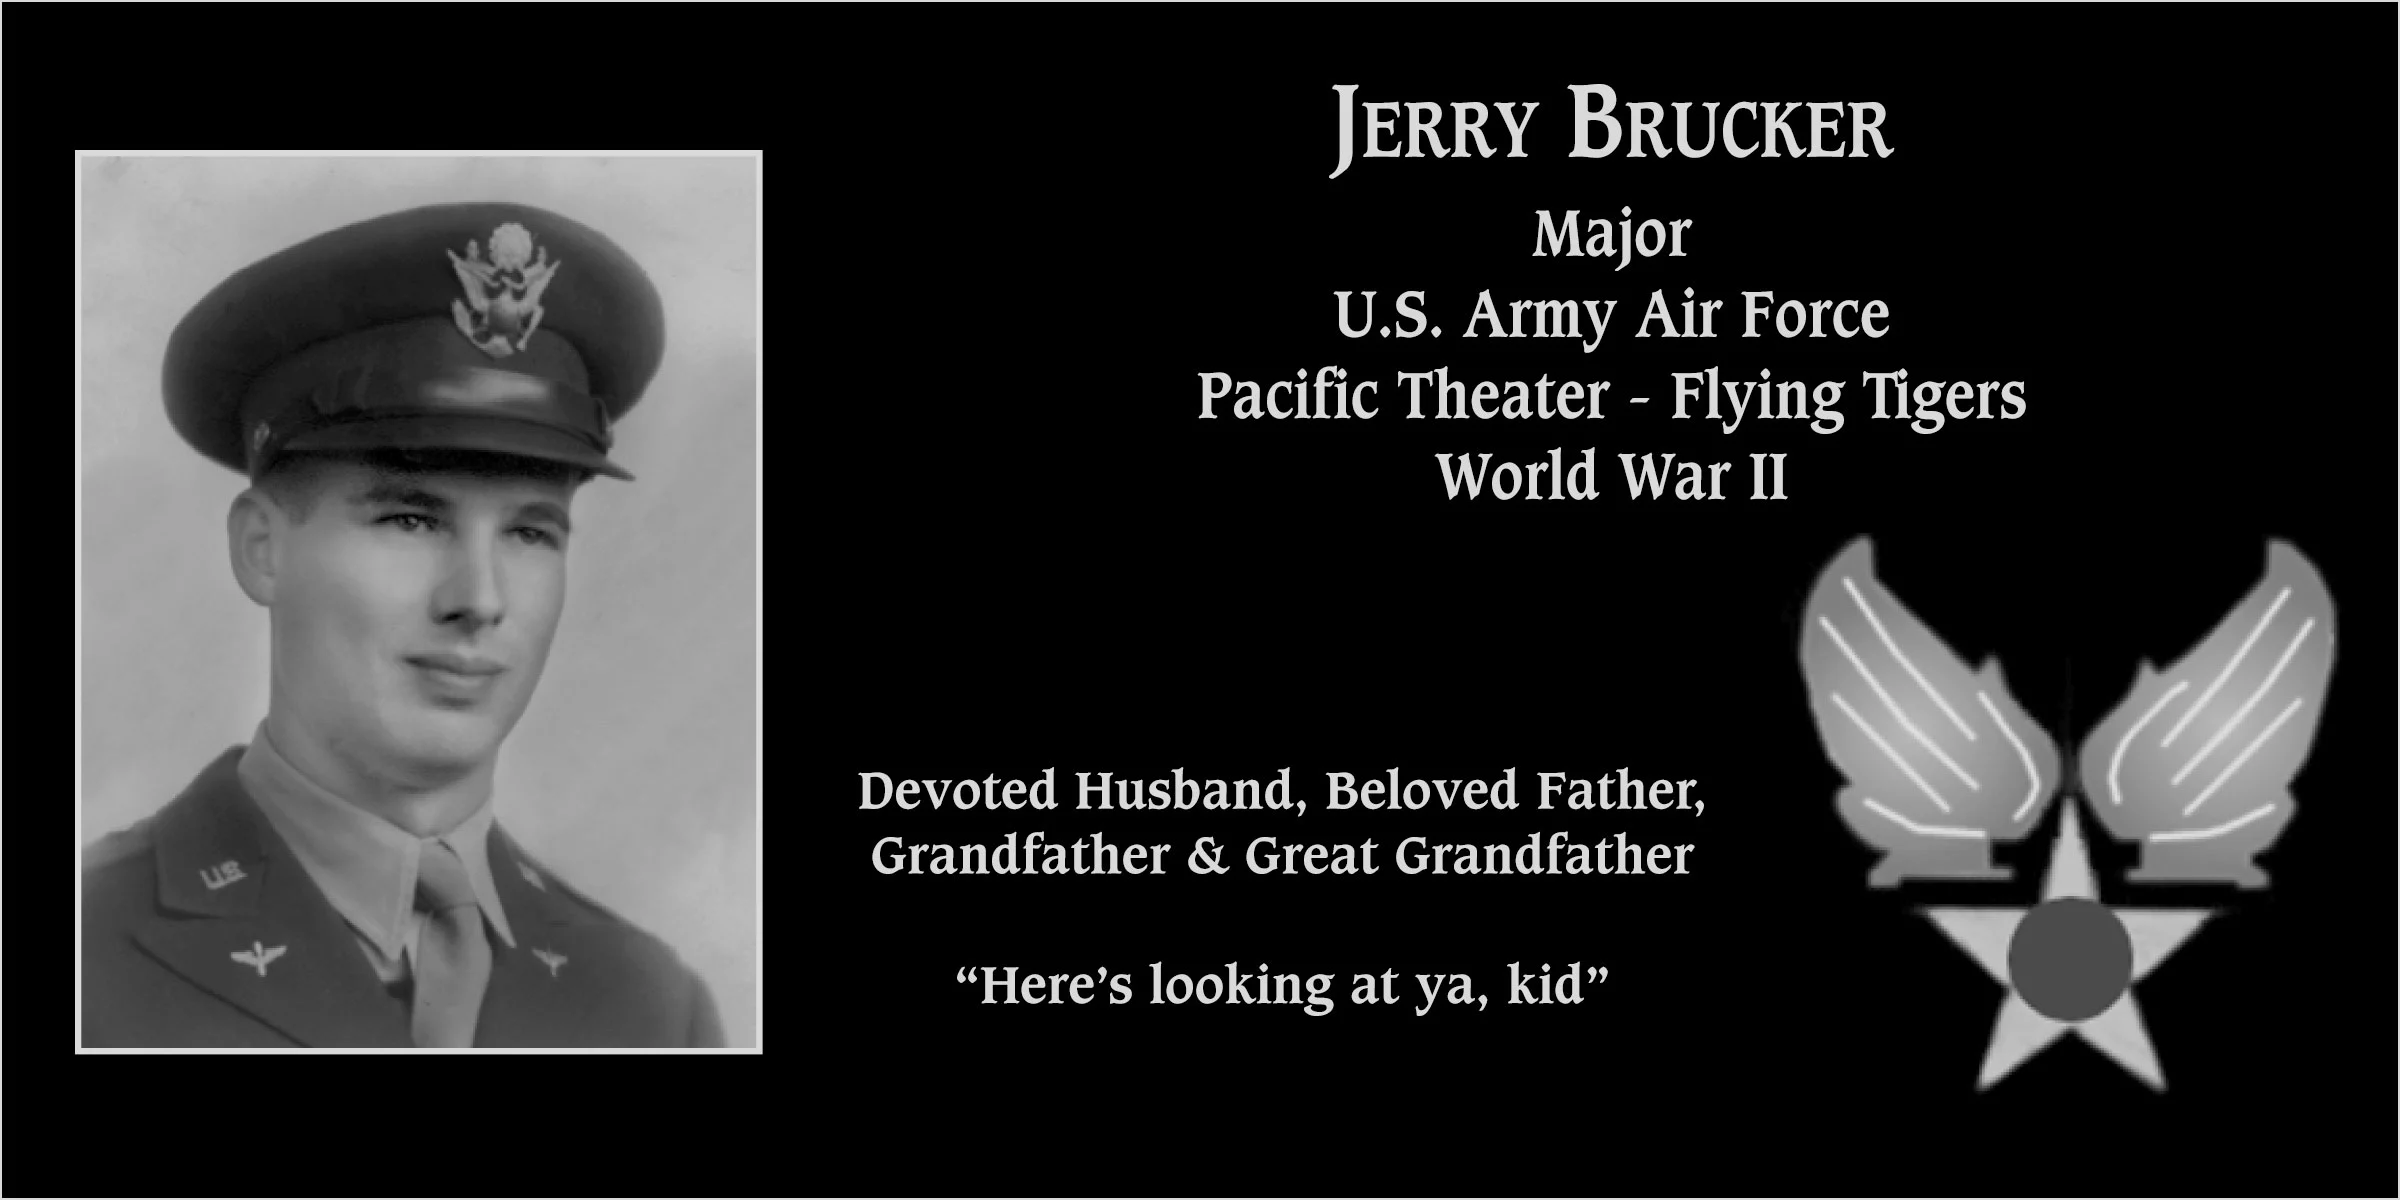 Jerry Brucker